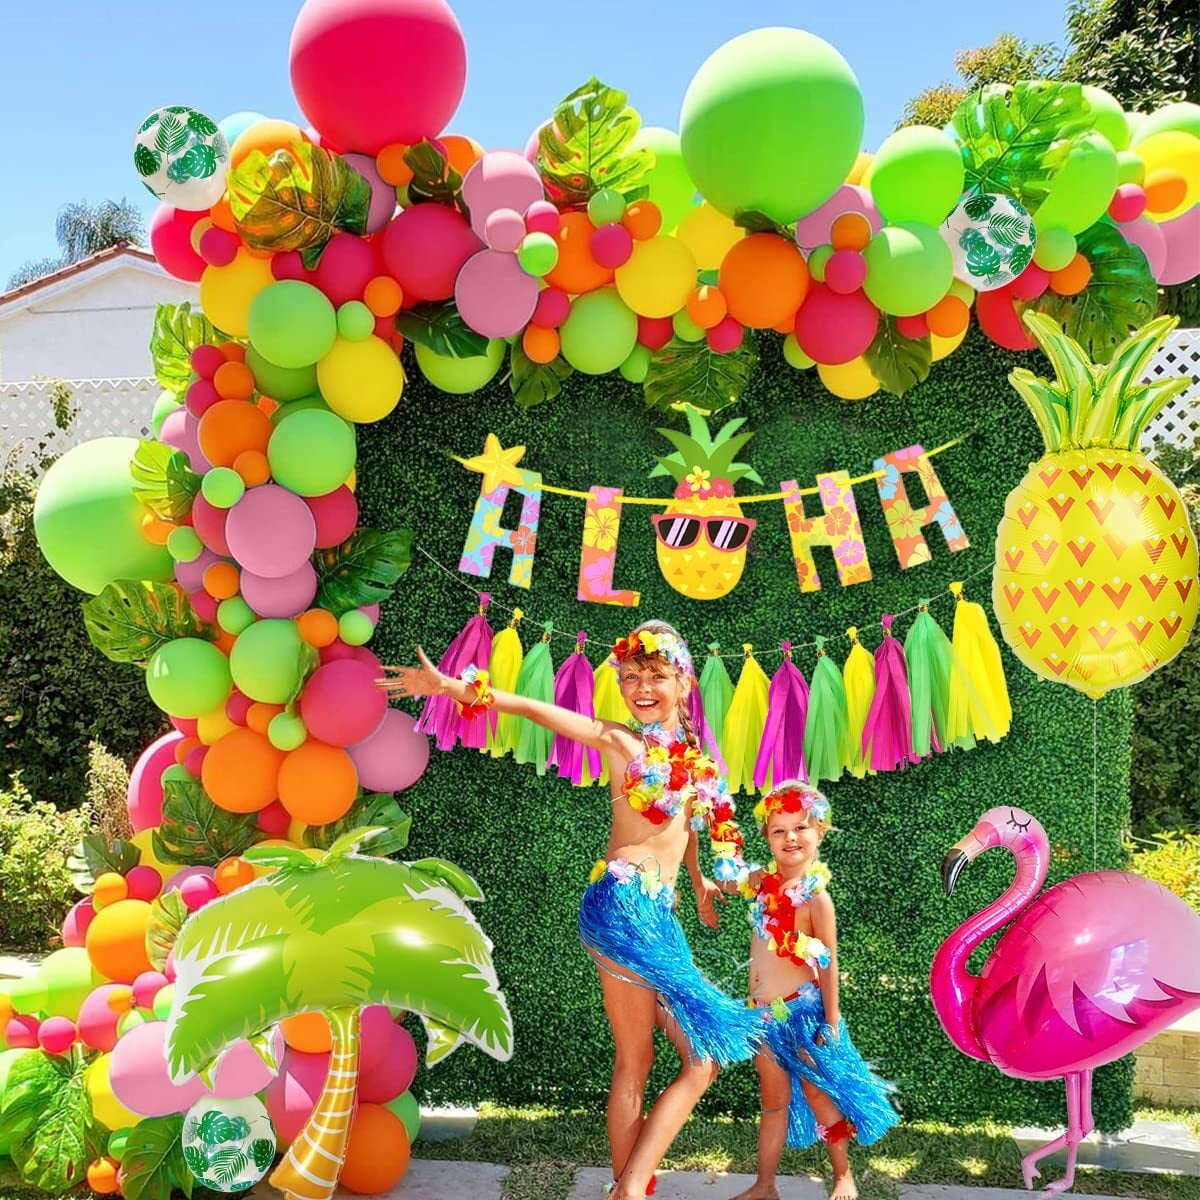 AOWEE Hawaiian Flamingo Party Supplies, Beach Themed Balloon